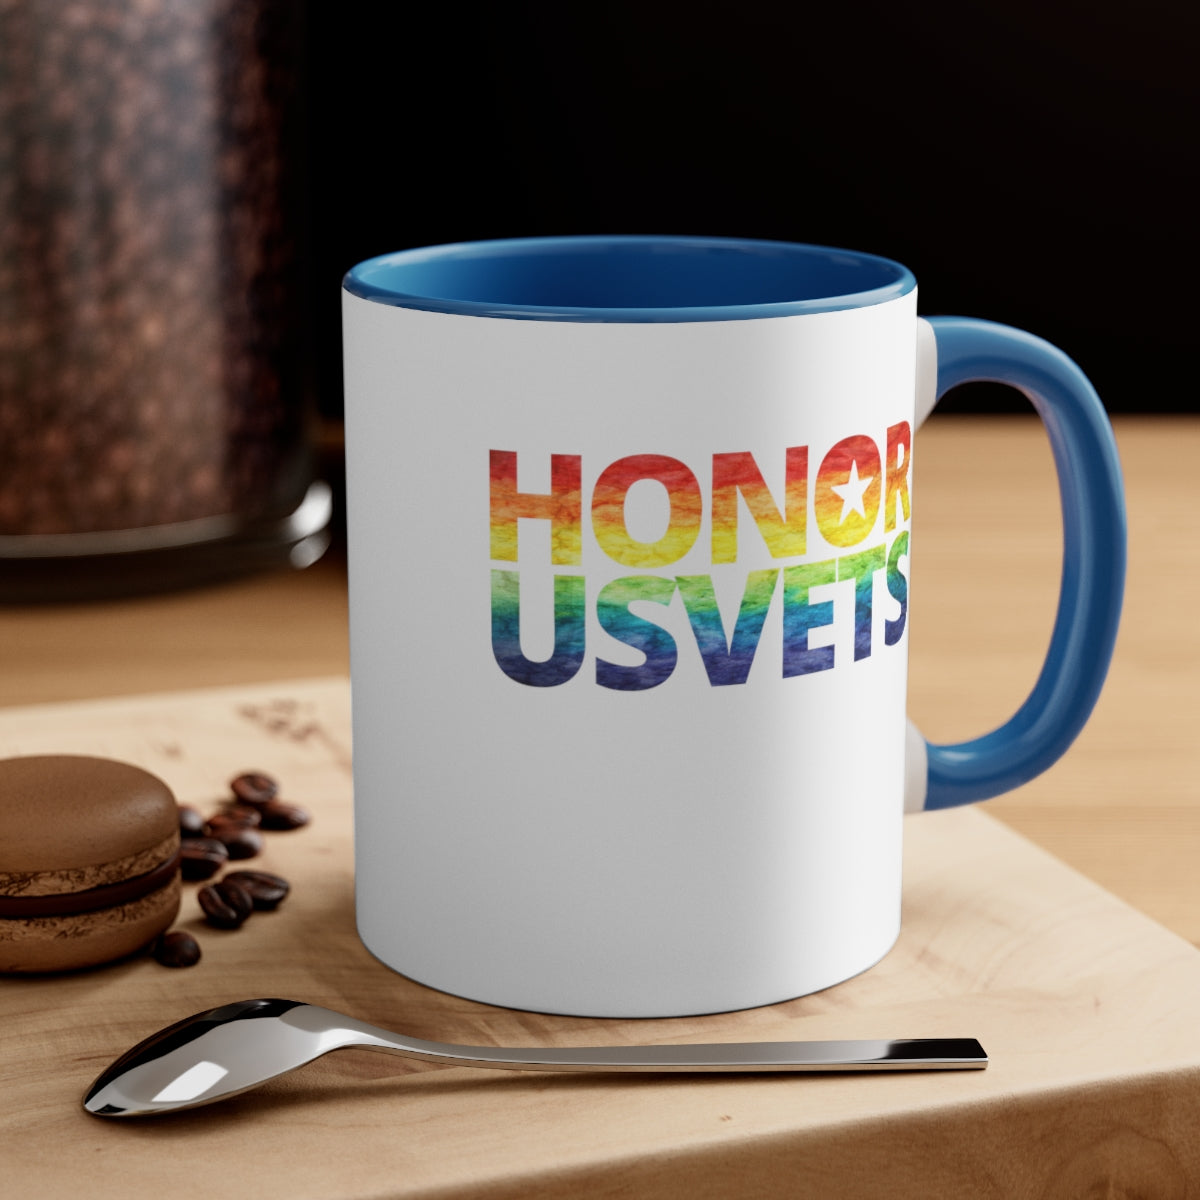 HONORUSVETS Pride Rainbow Accent Coffee Mug, 11oz